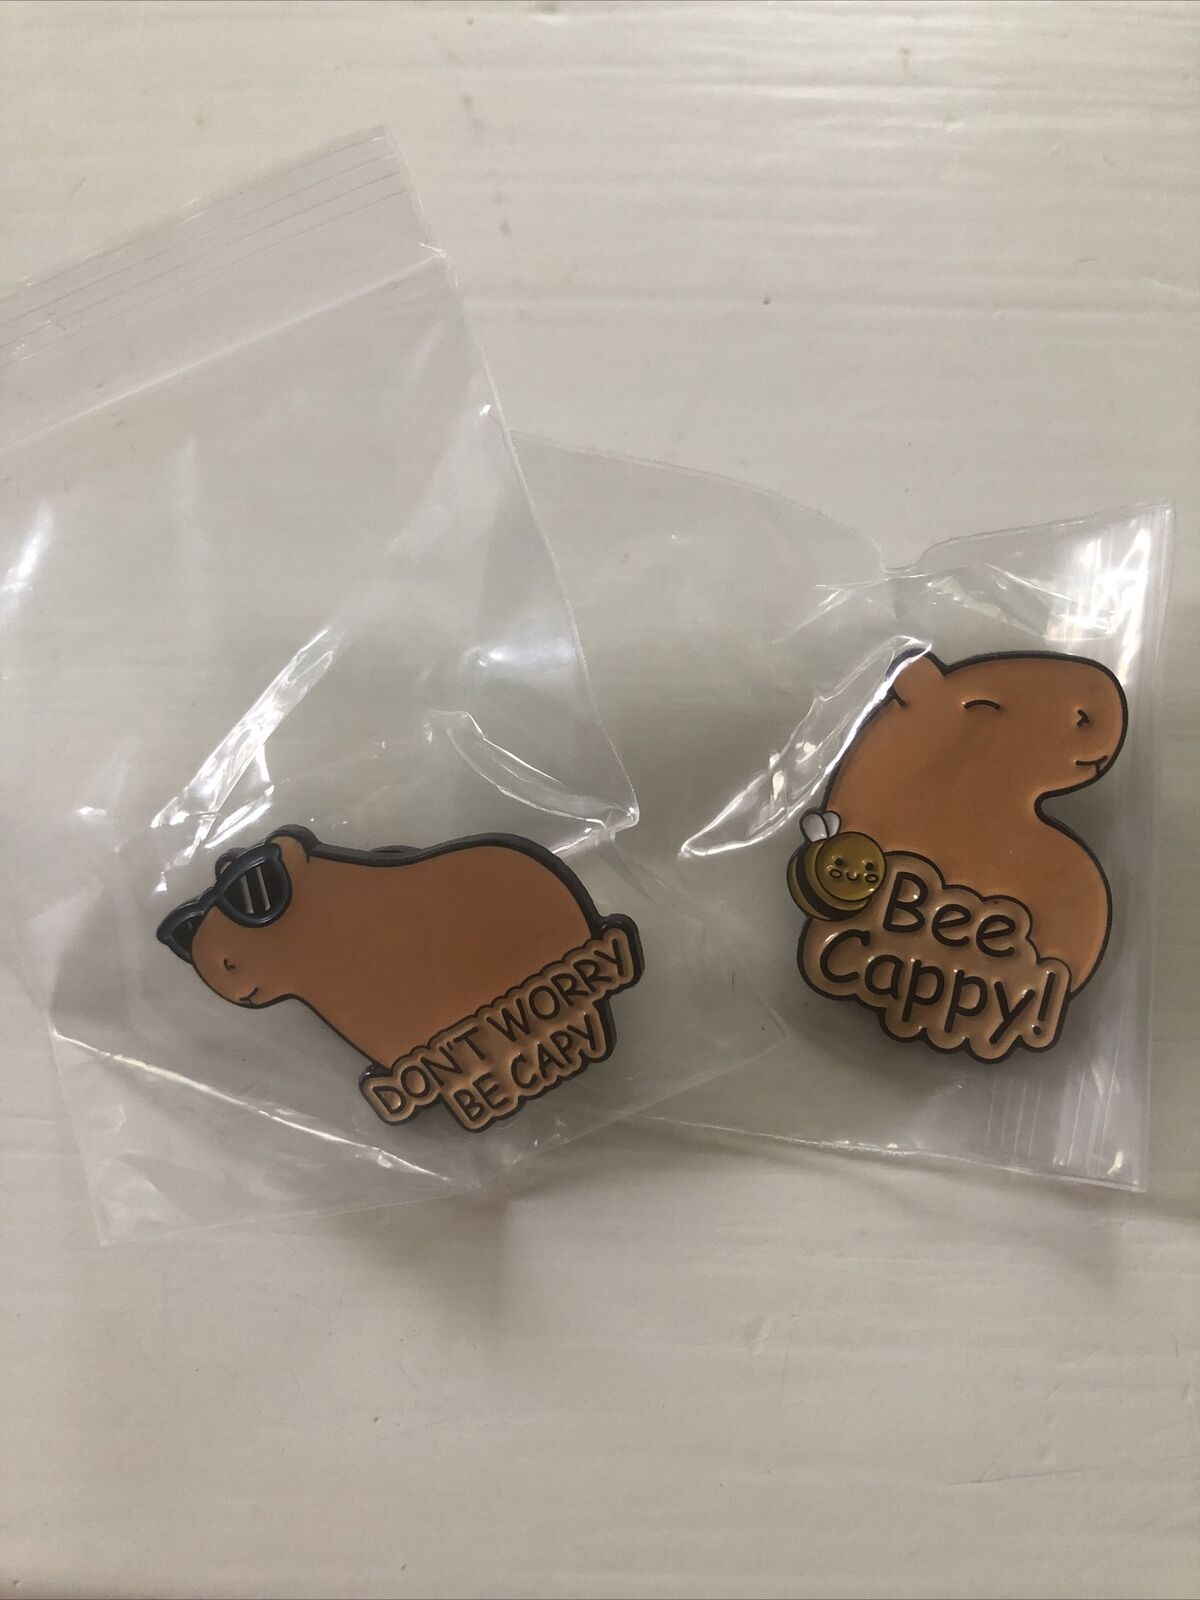 Capybara Enamel Pins Set Of 2